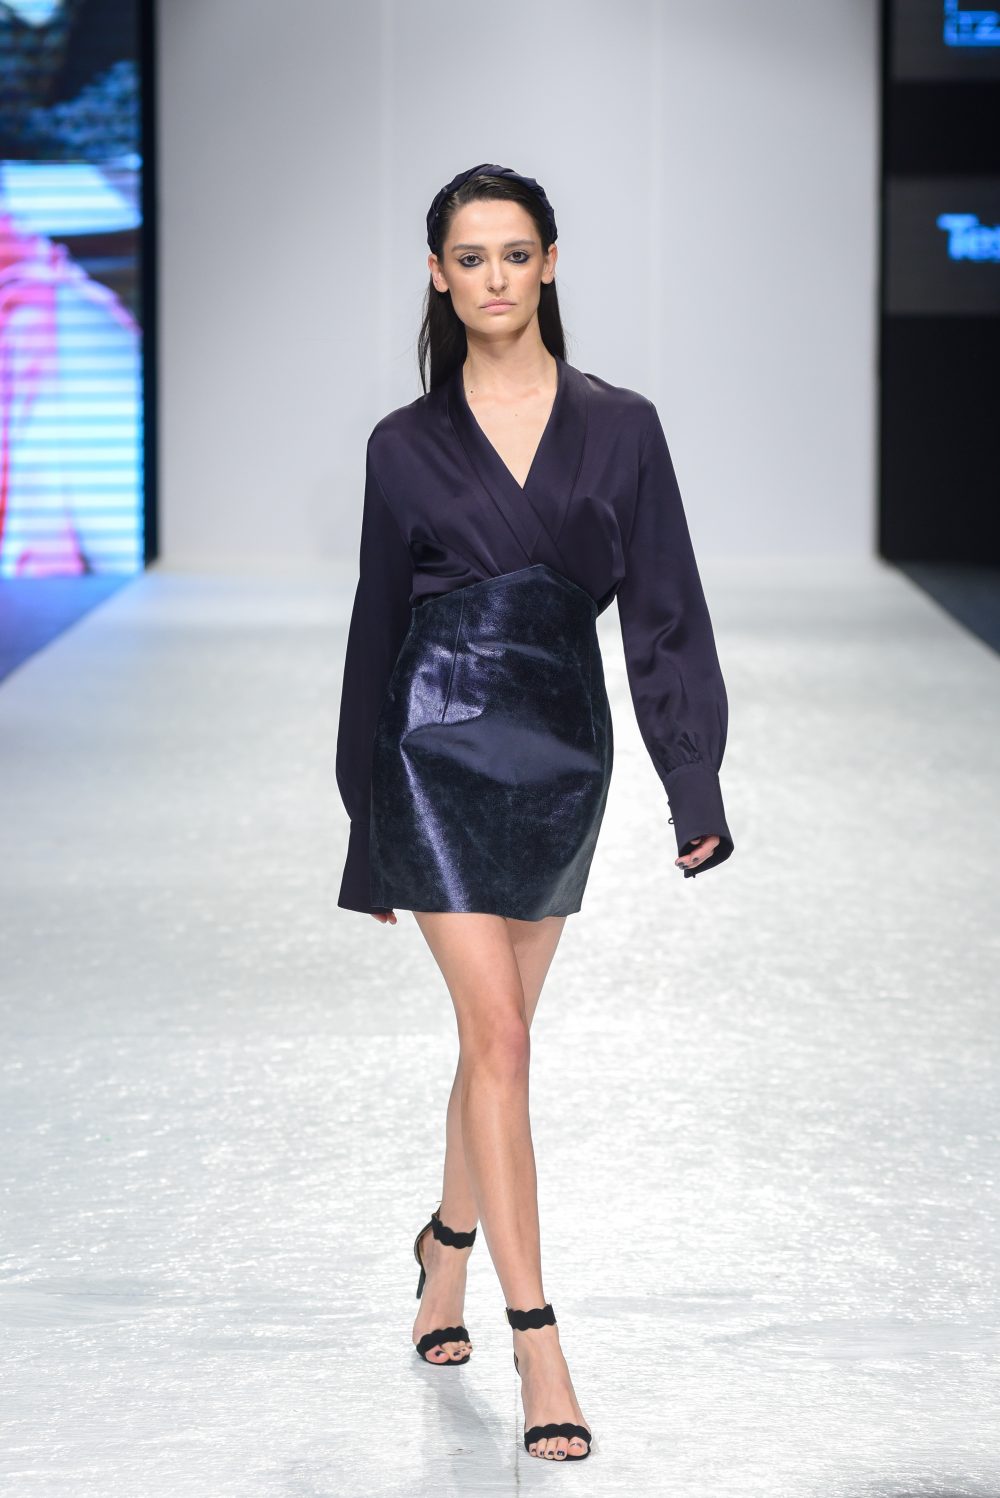 DJT1454 Tijana Zunic e1555928134293 Perwoll Fashion Week: Revije autorske mode i Martini Vesto